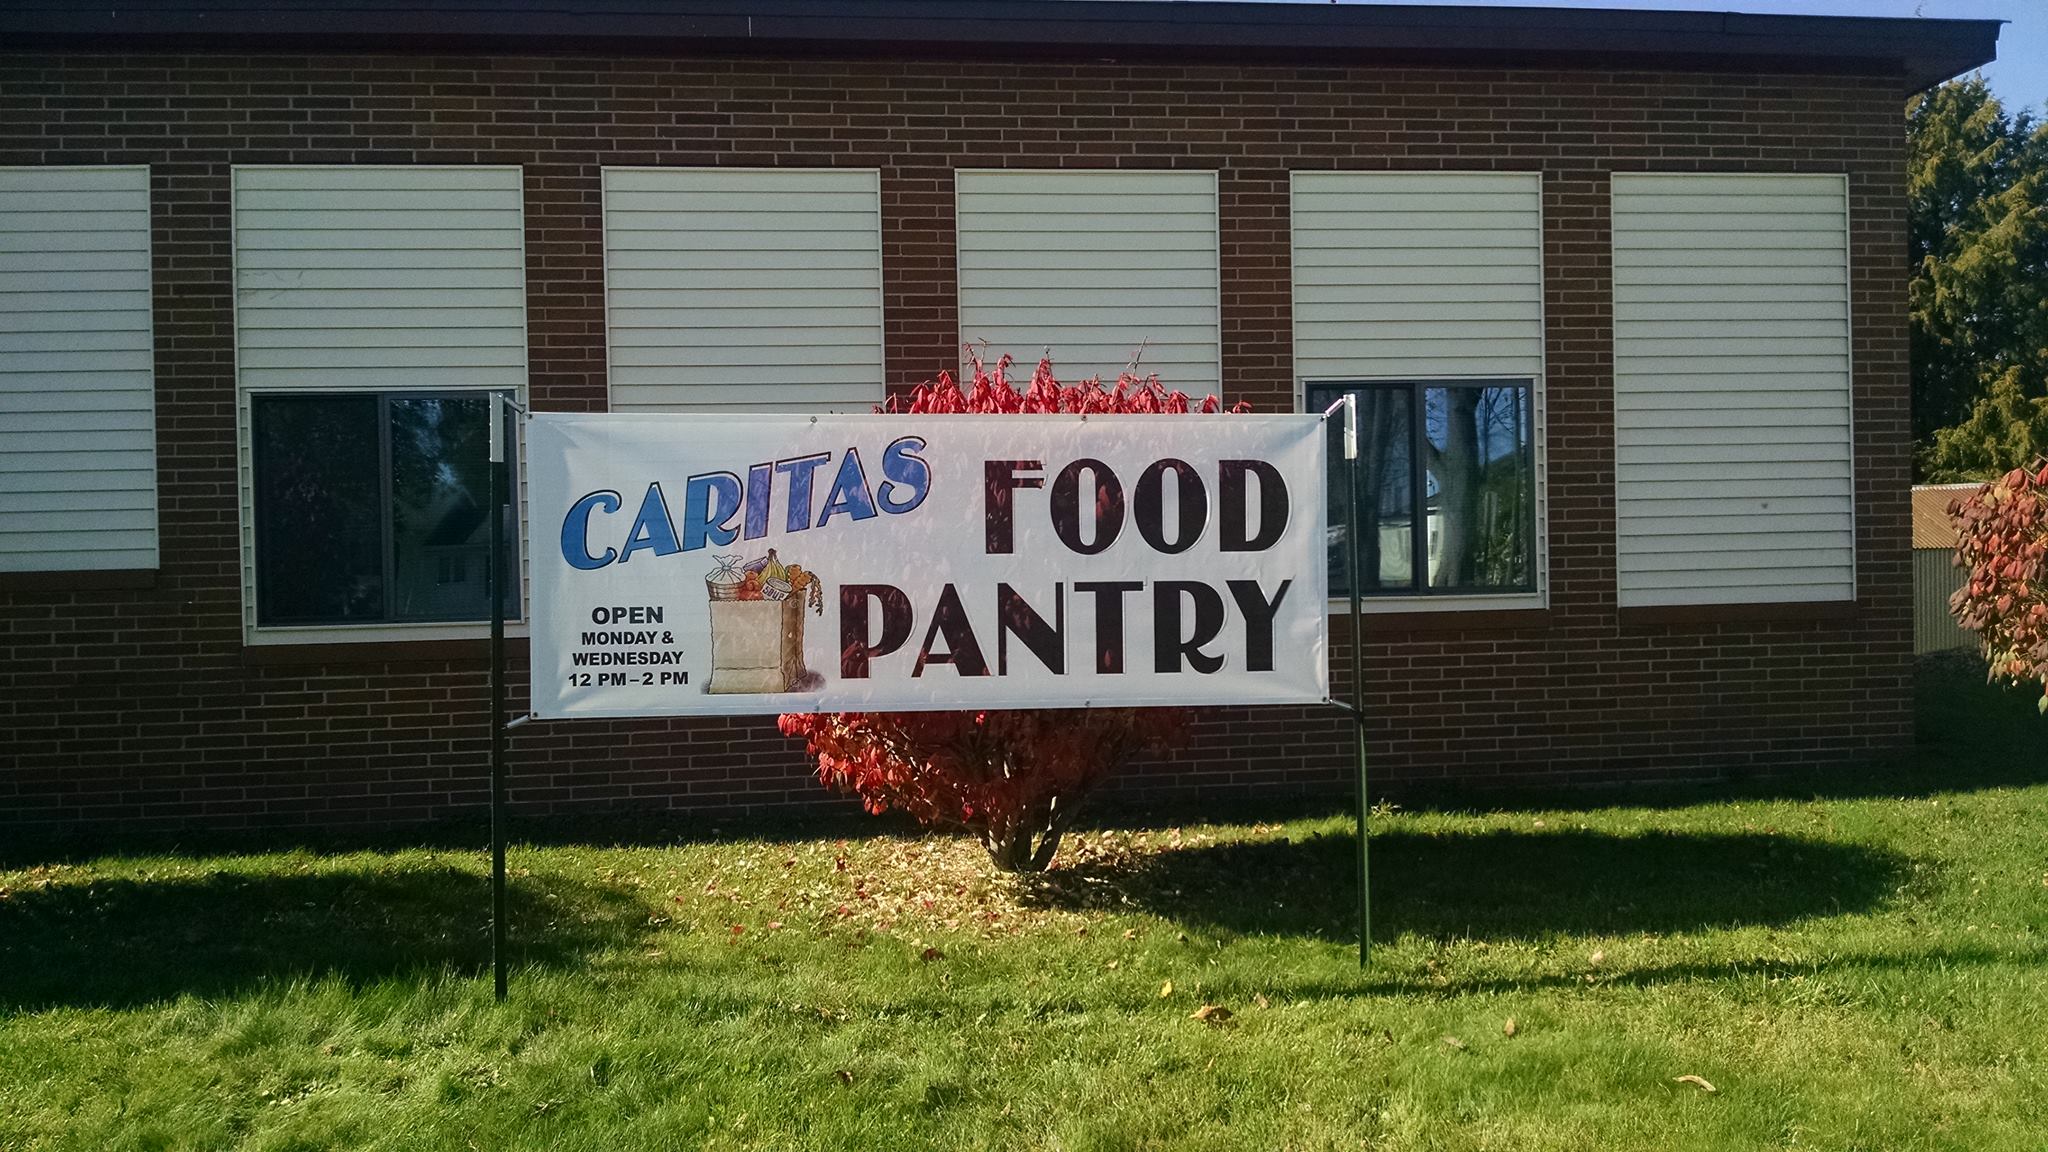 Caritas Food Pantry at St. Mary's Catholic Church